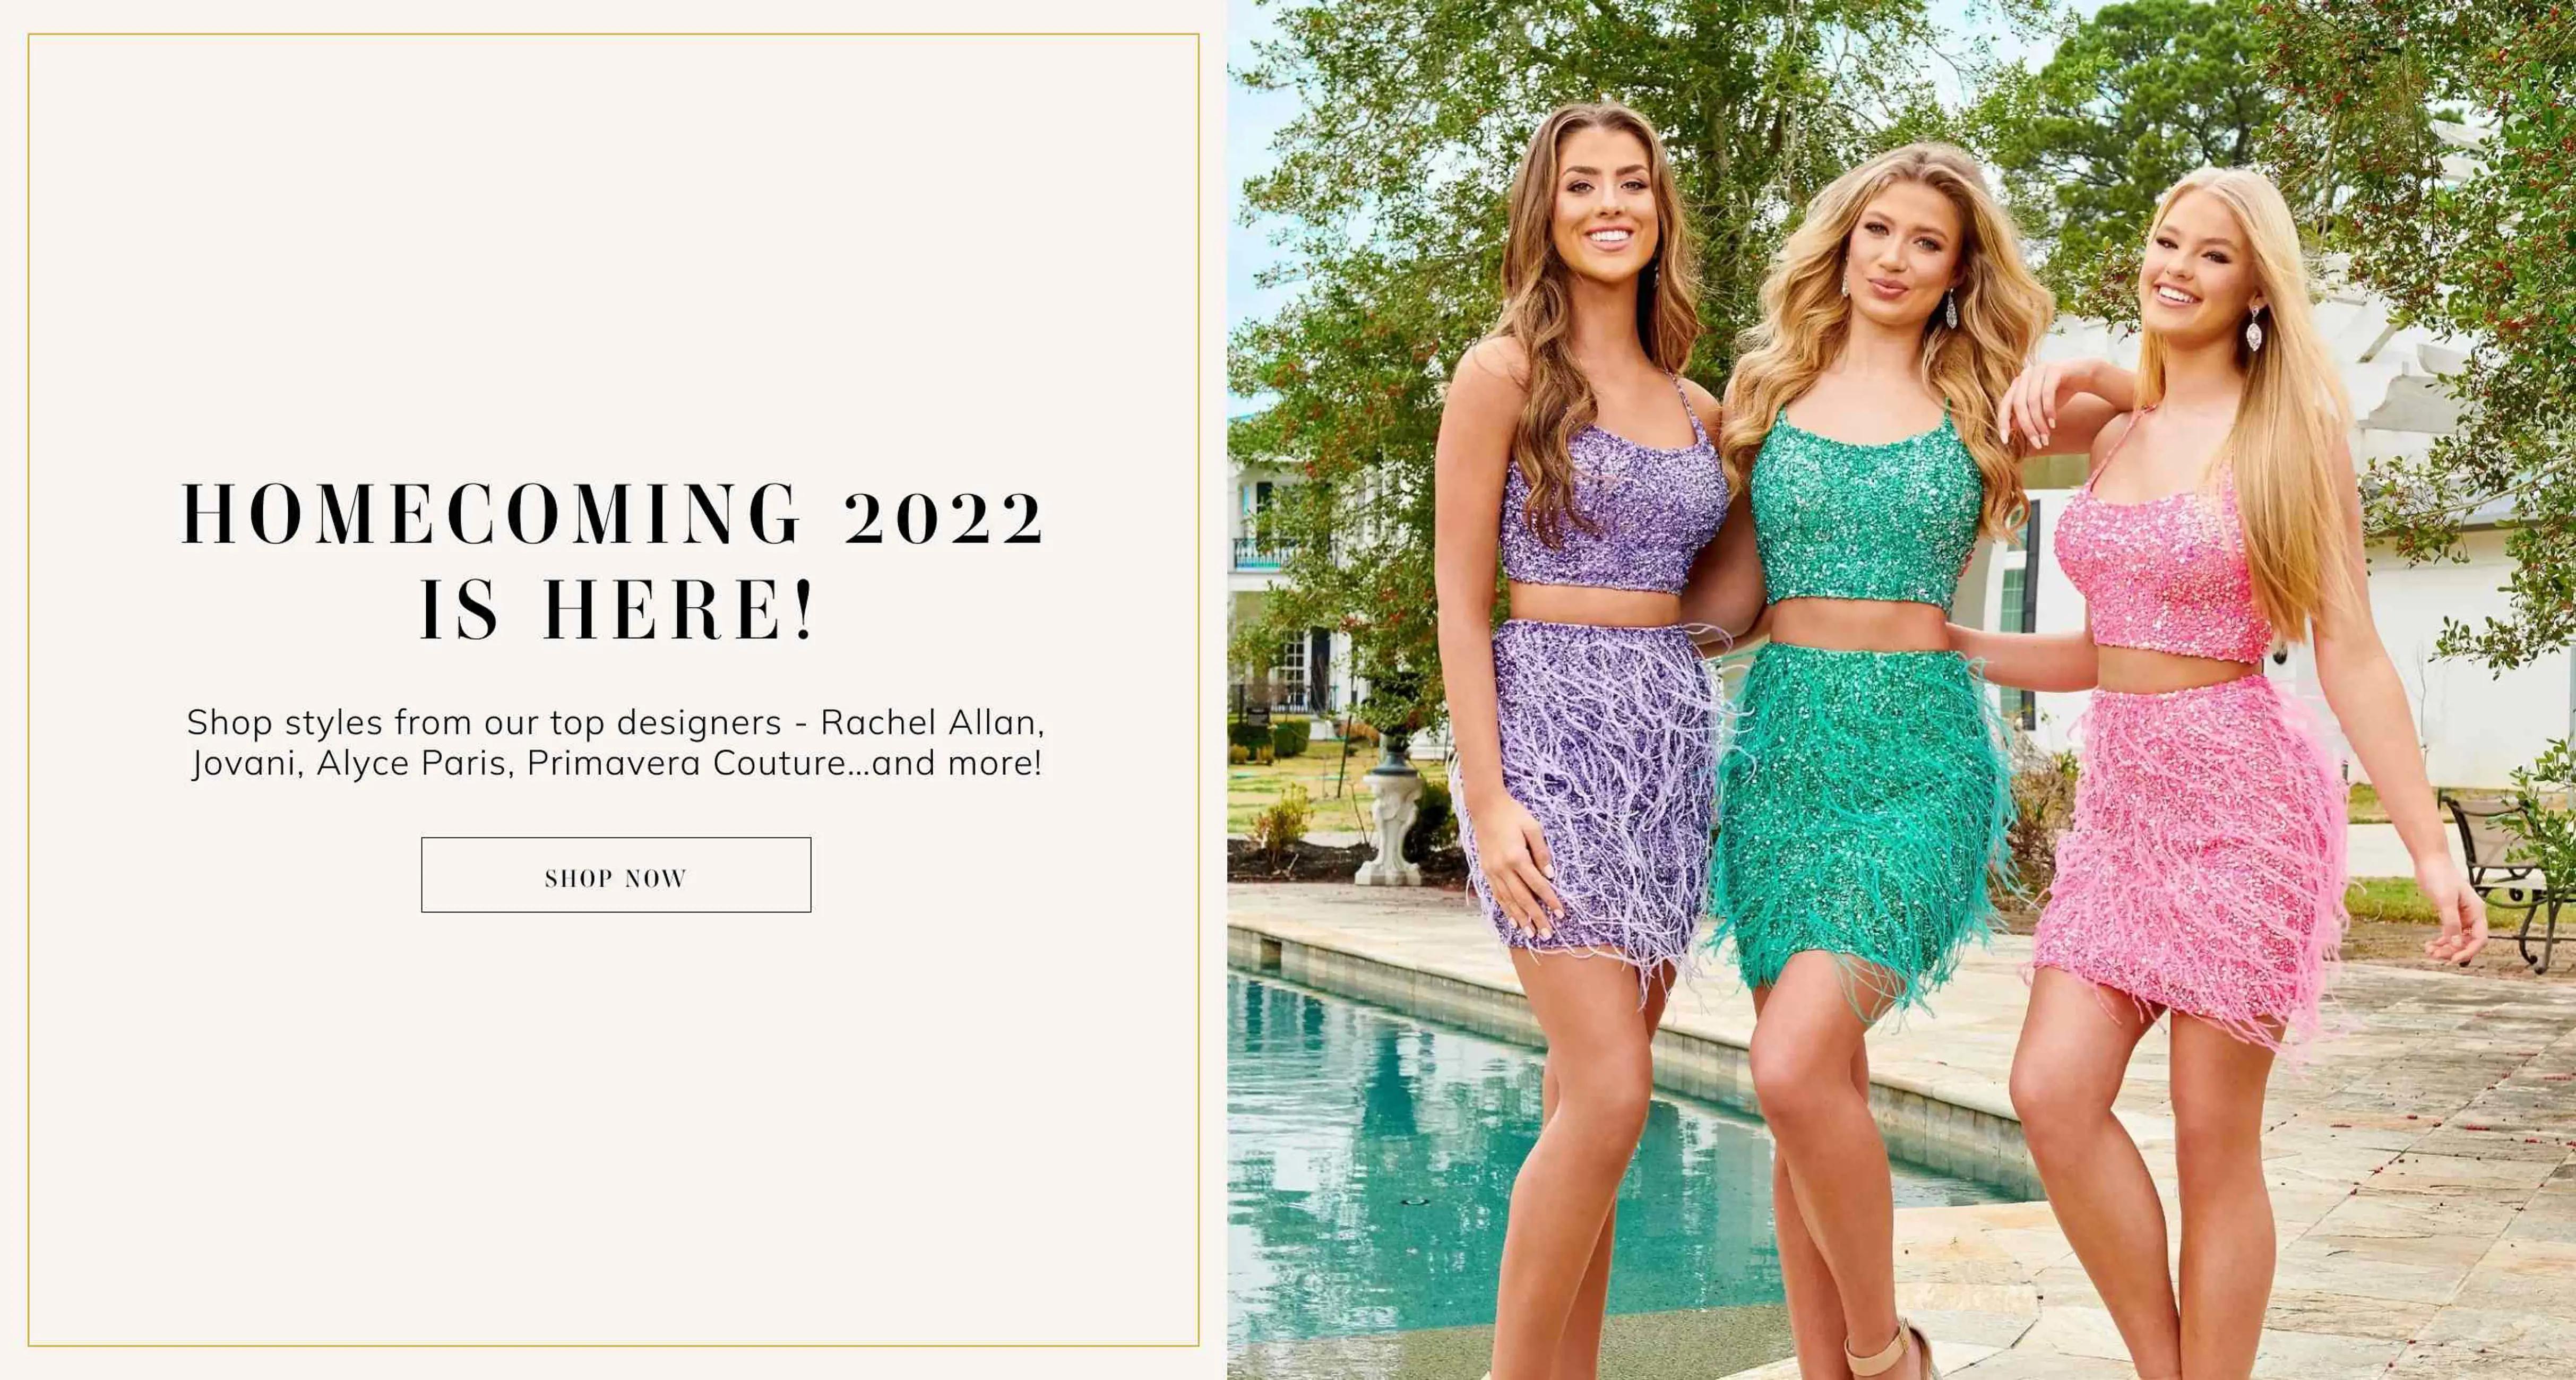 Homecoming 2022 dresses at Mimi's Bridal. Shop Now